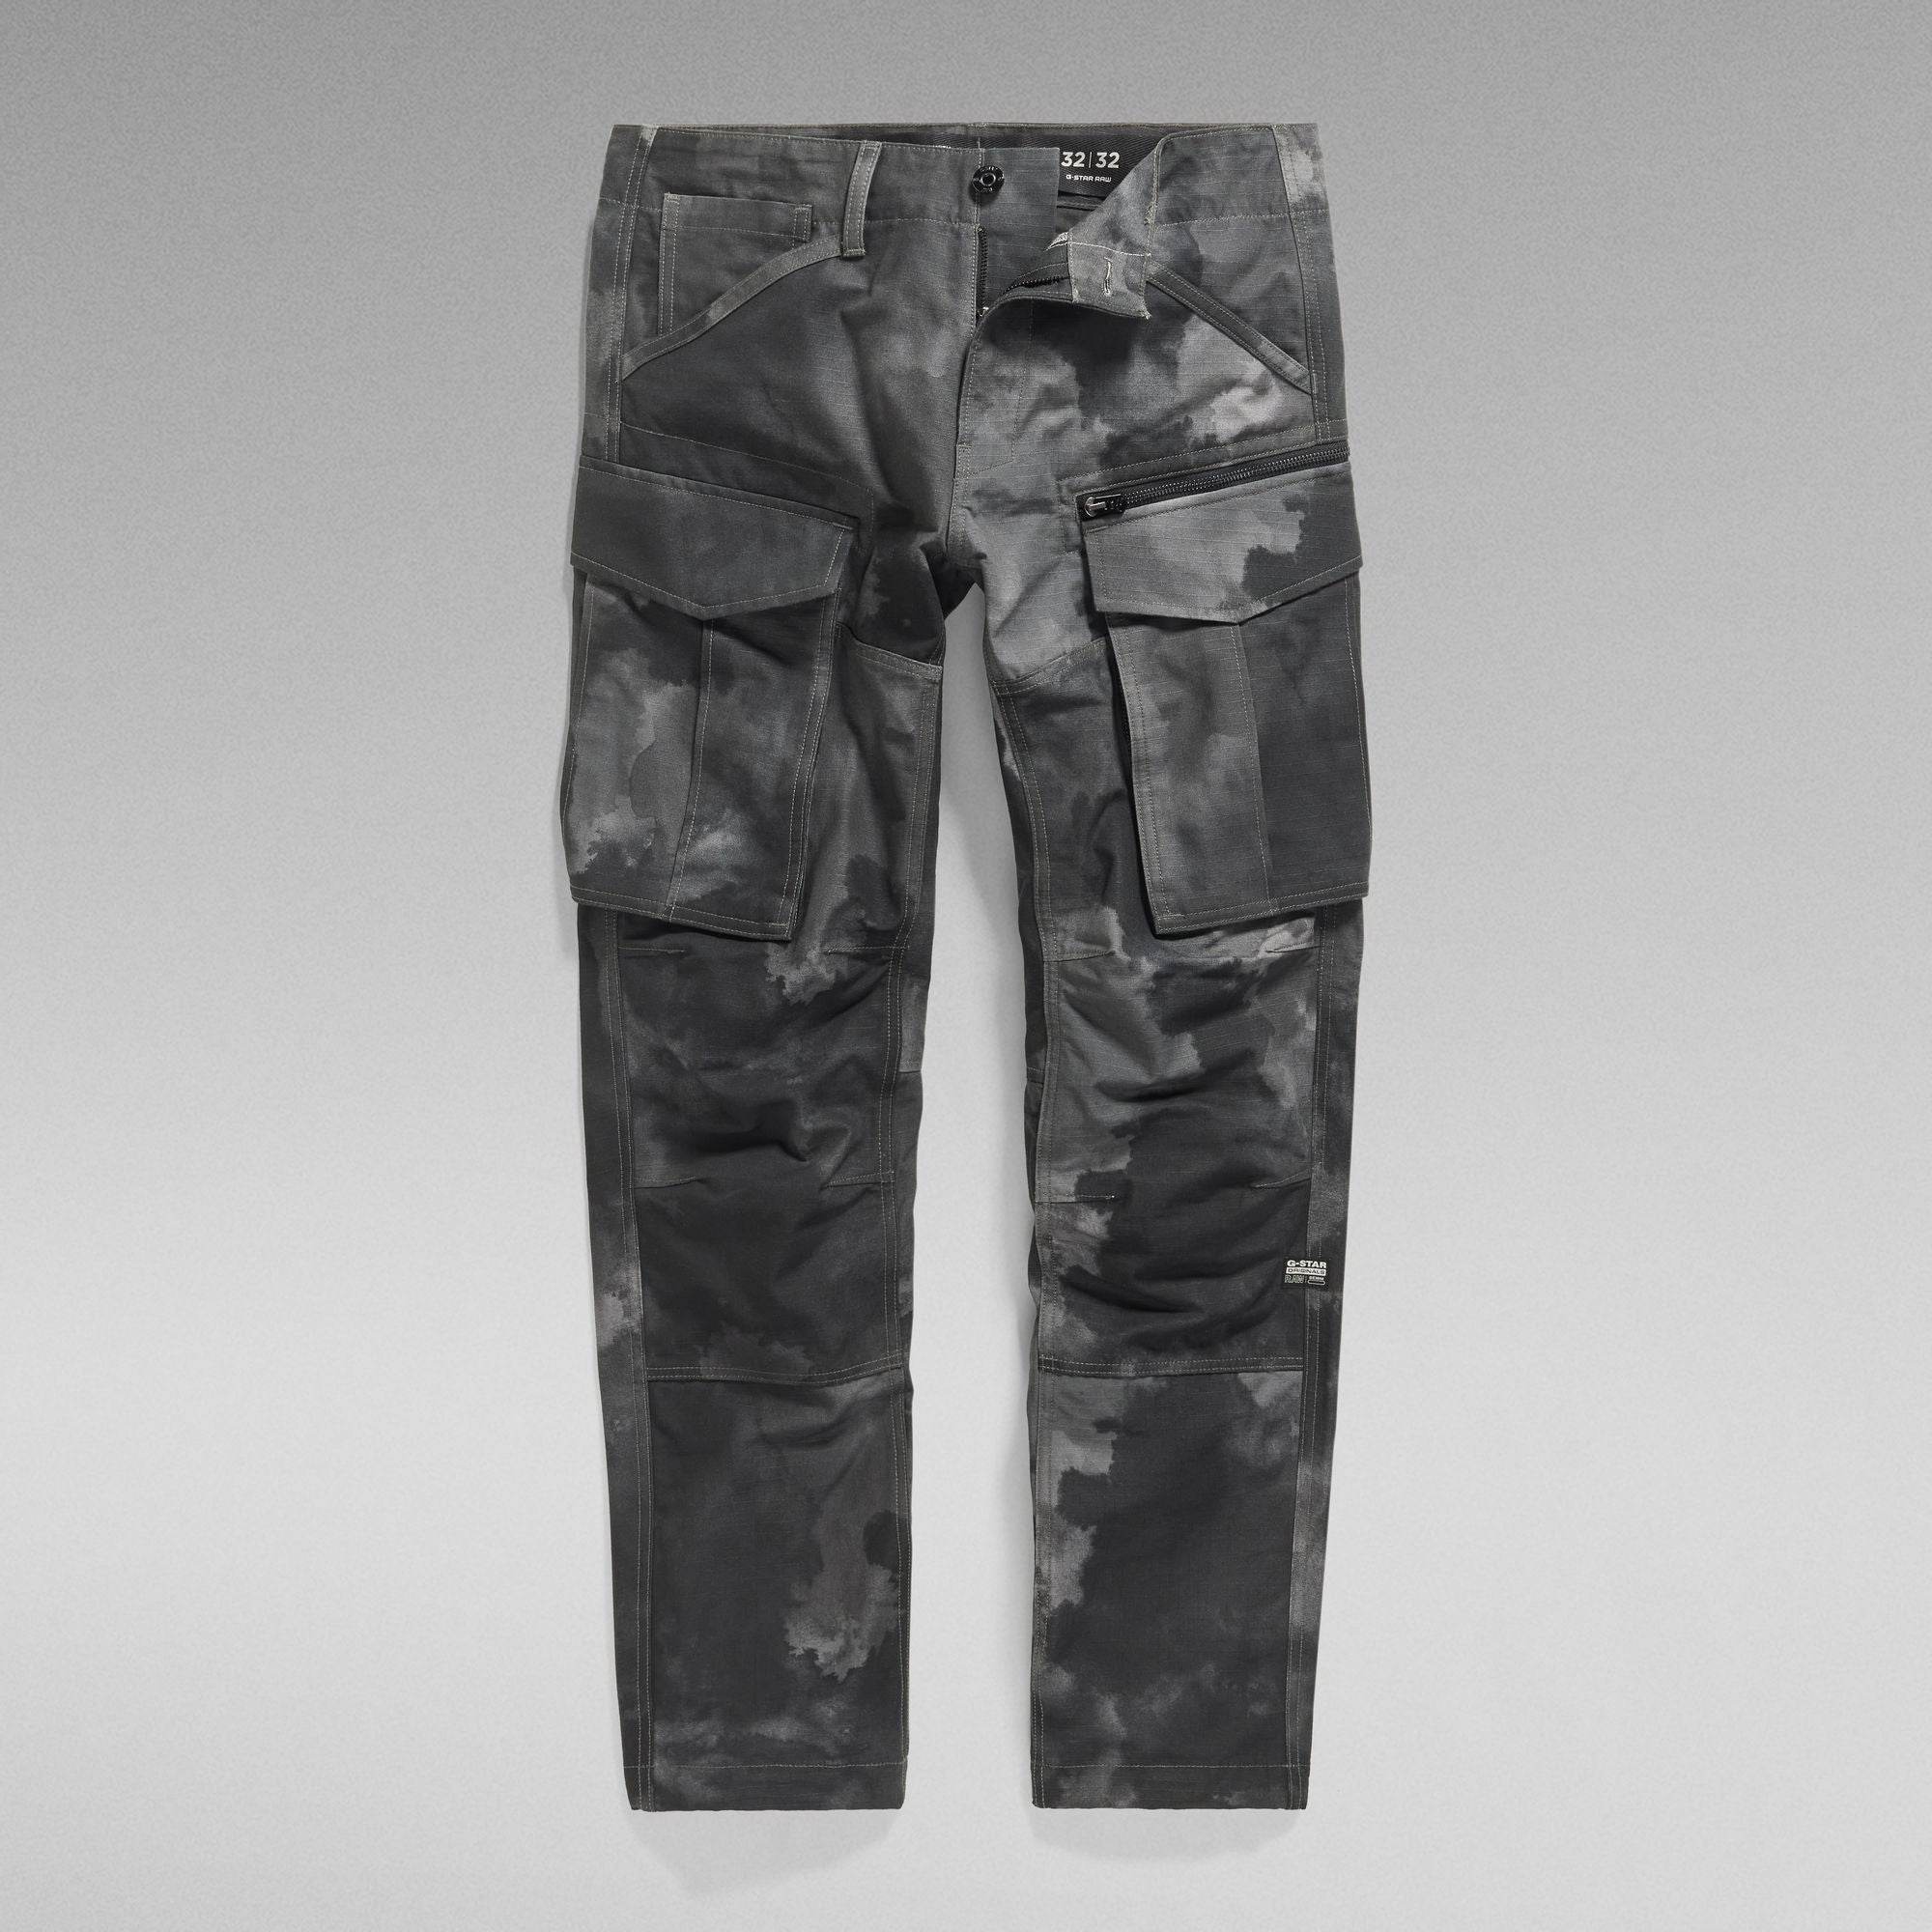 G-Star Denim Jeans - Rovic Zip 3D - Dark Black Blurry Camo